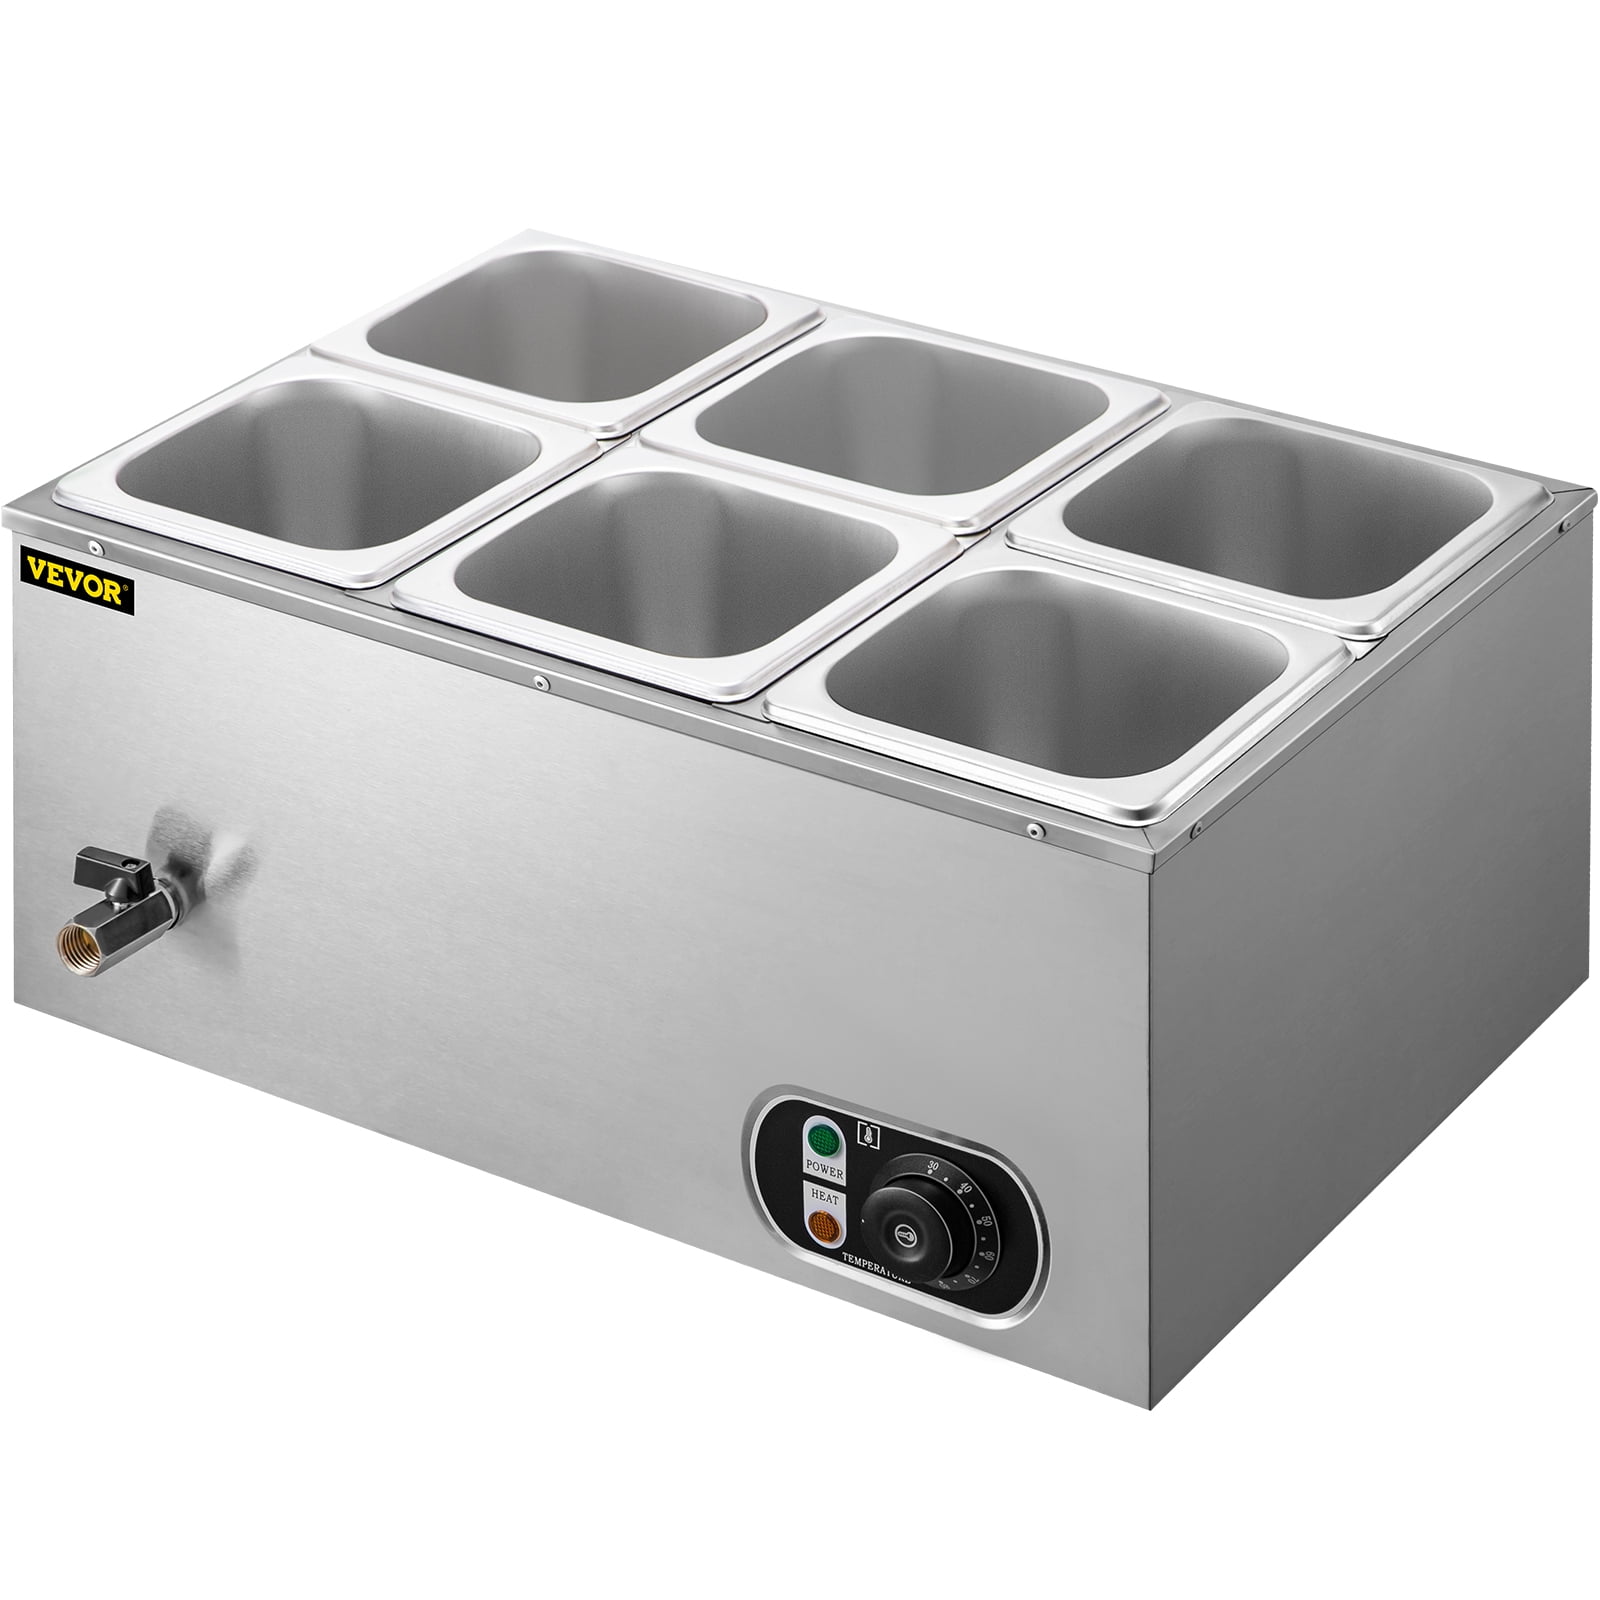 12 x 20 Drop-In Uninsulated Hot Food Warmer, Model SS206